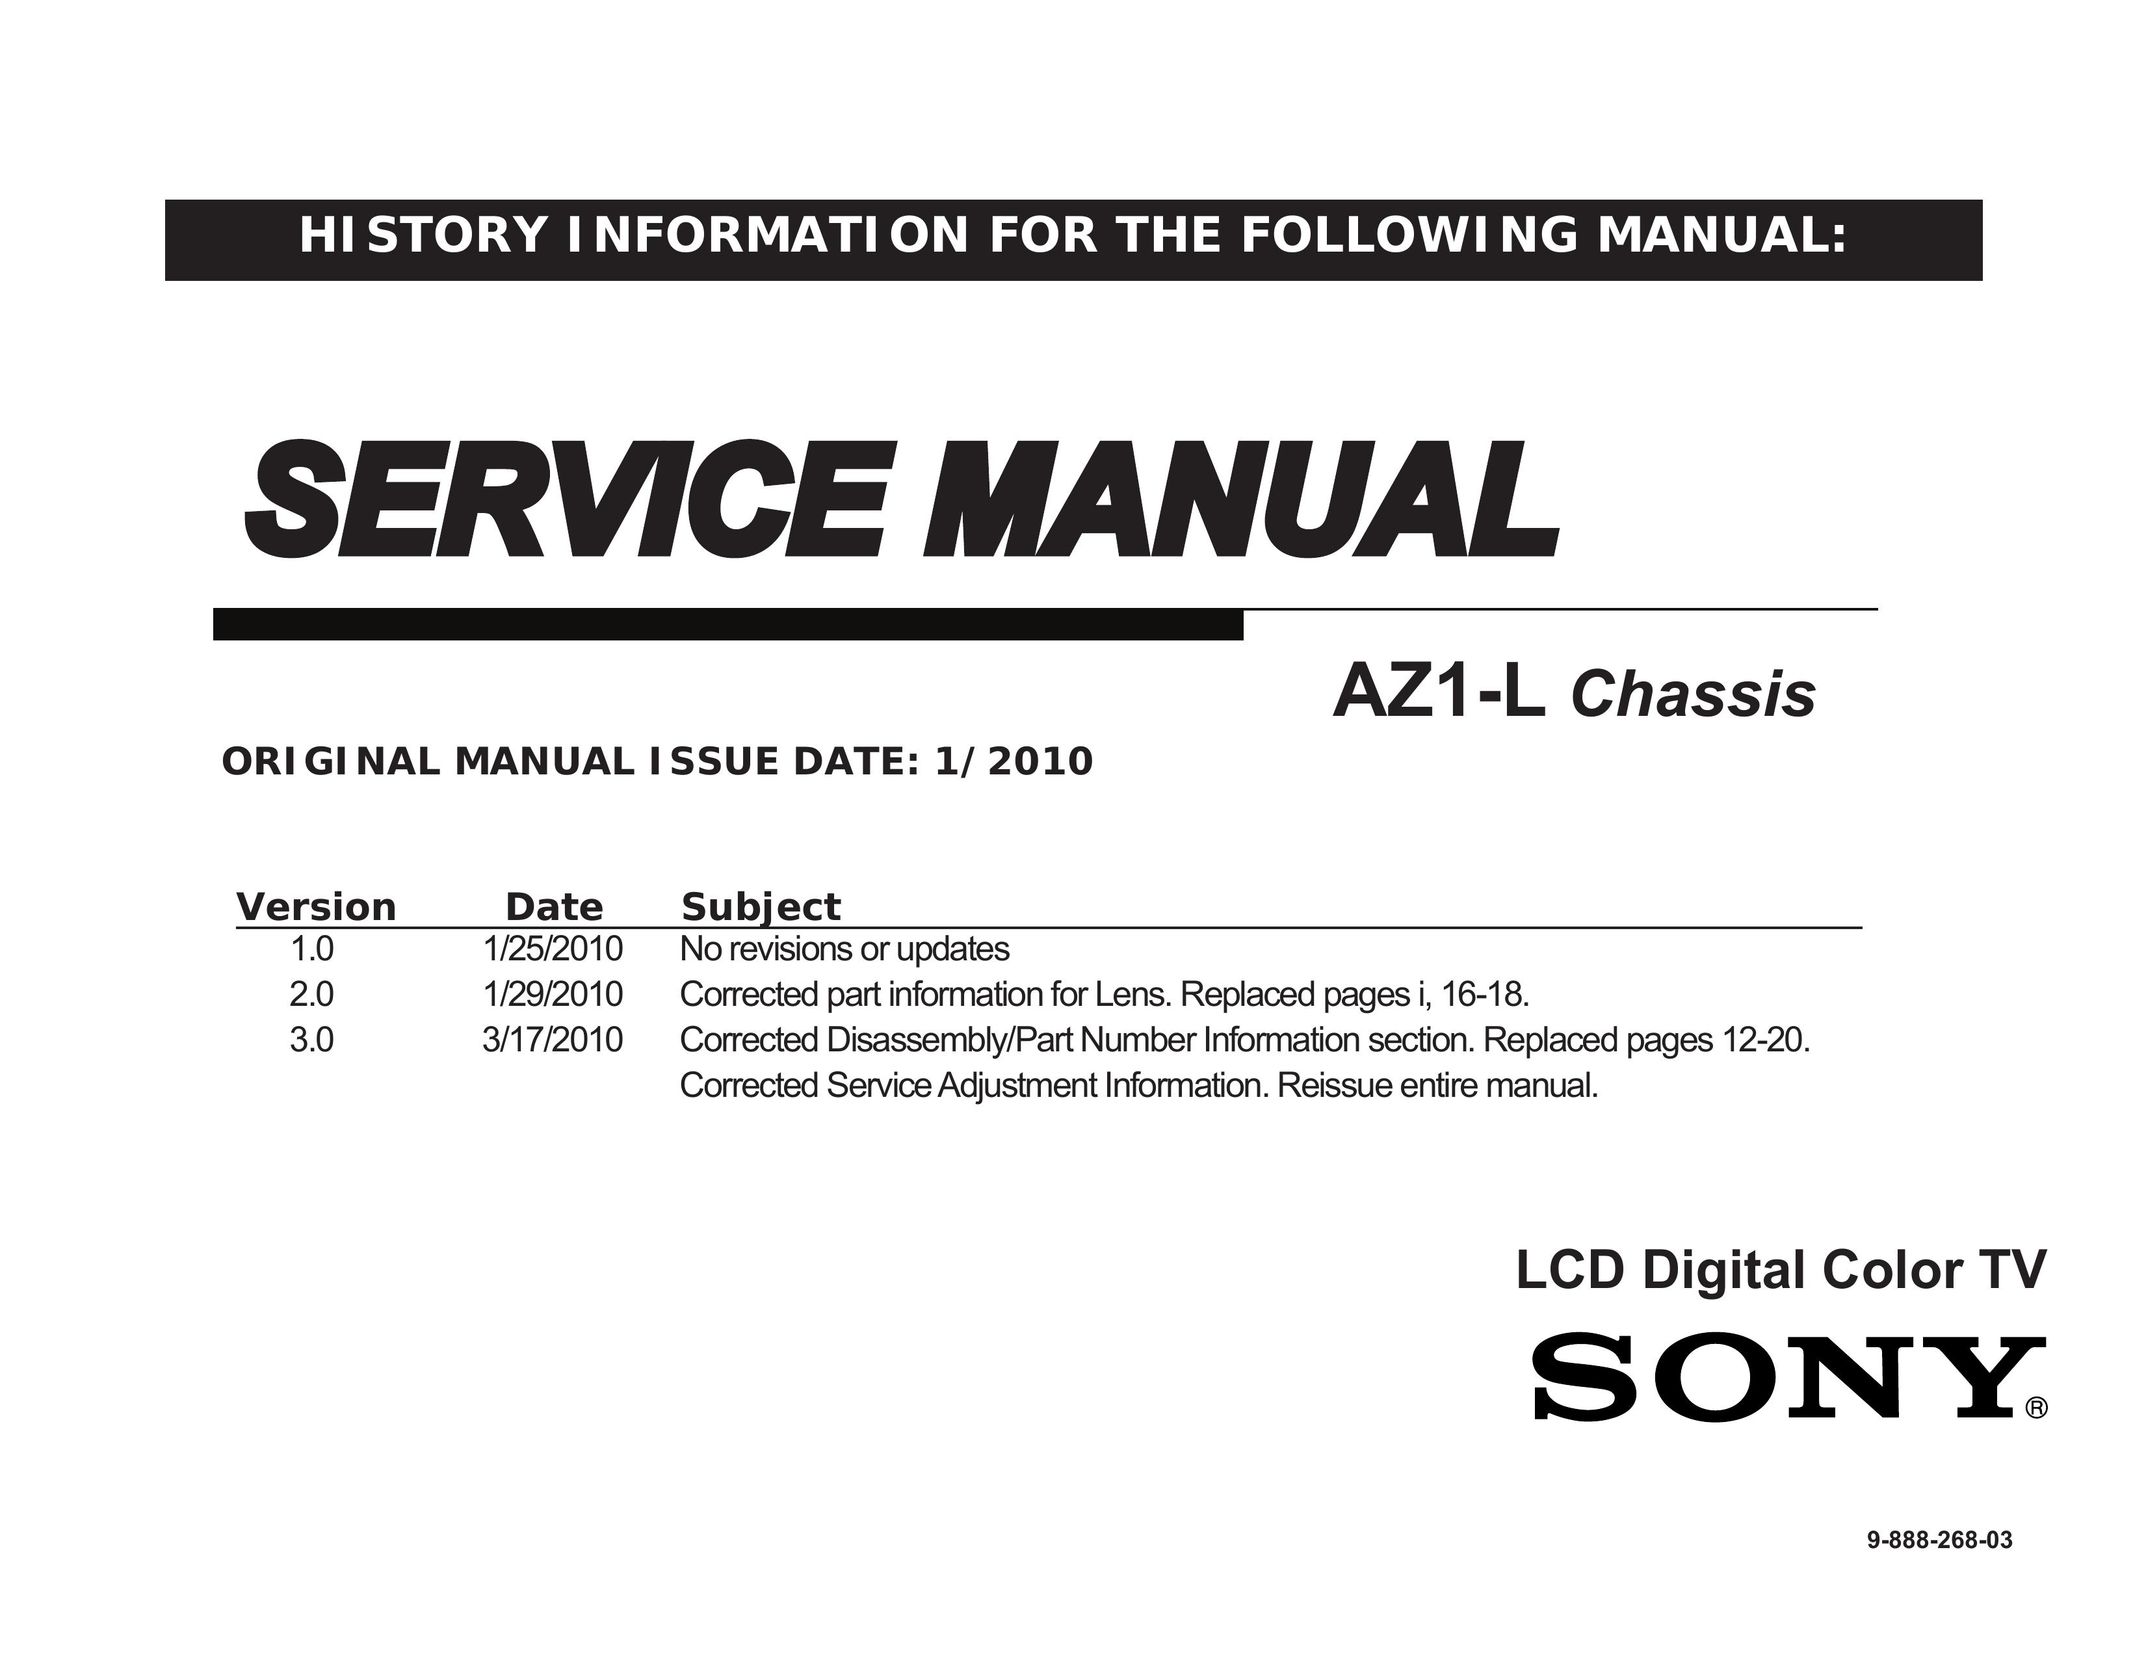 Sony 32EX700 Car Satellite TV System User Manual